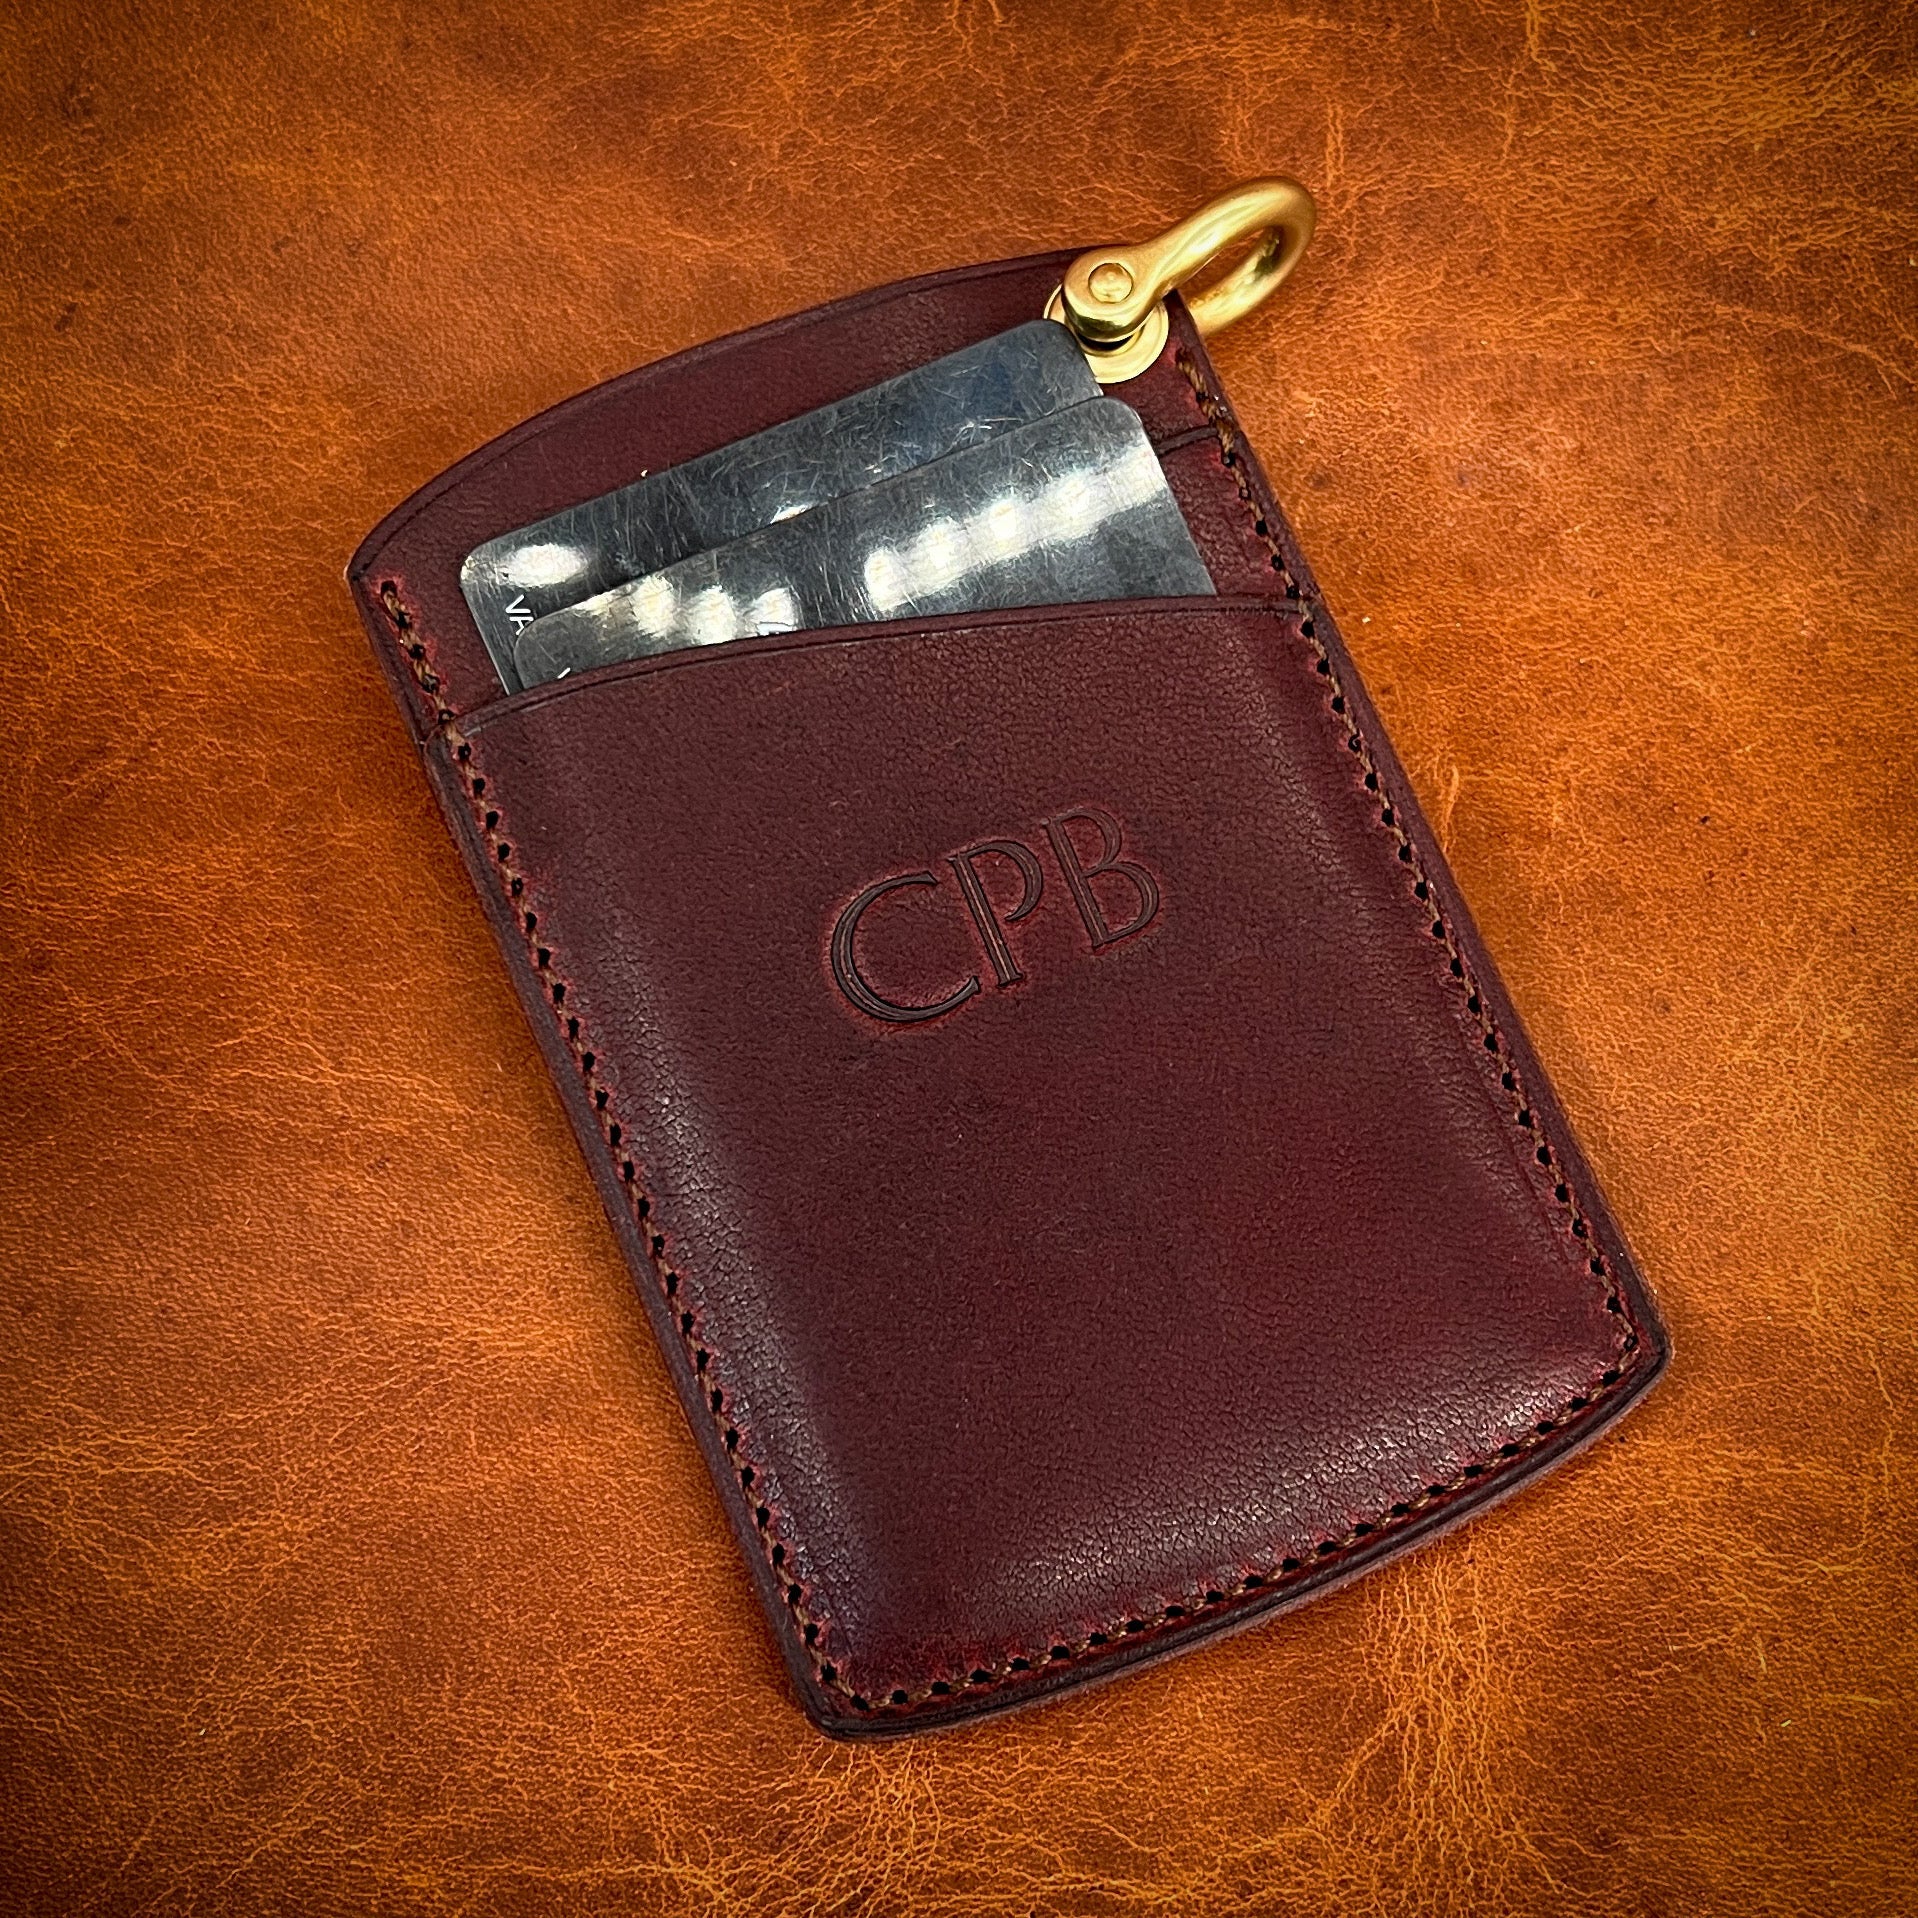 Patent Leather Wallet Card Case Wallet Pen Holder in Orange